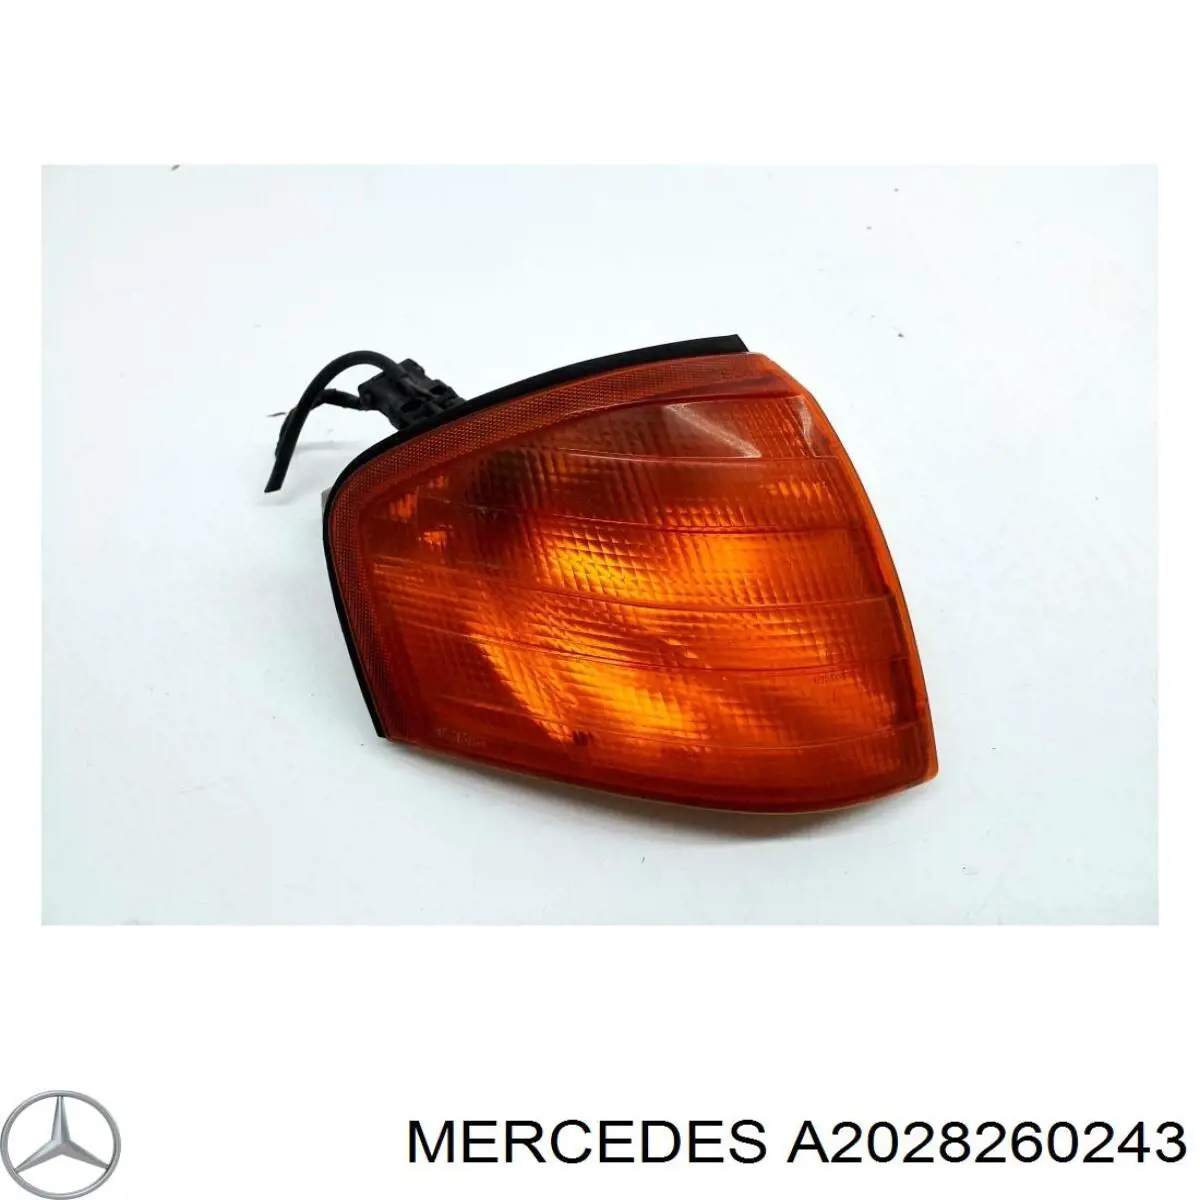 Указатель поворота правый Mercedes A2028260243